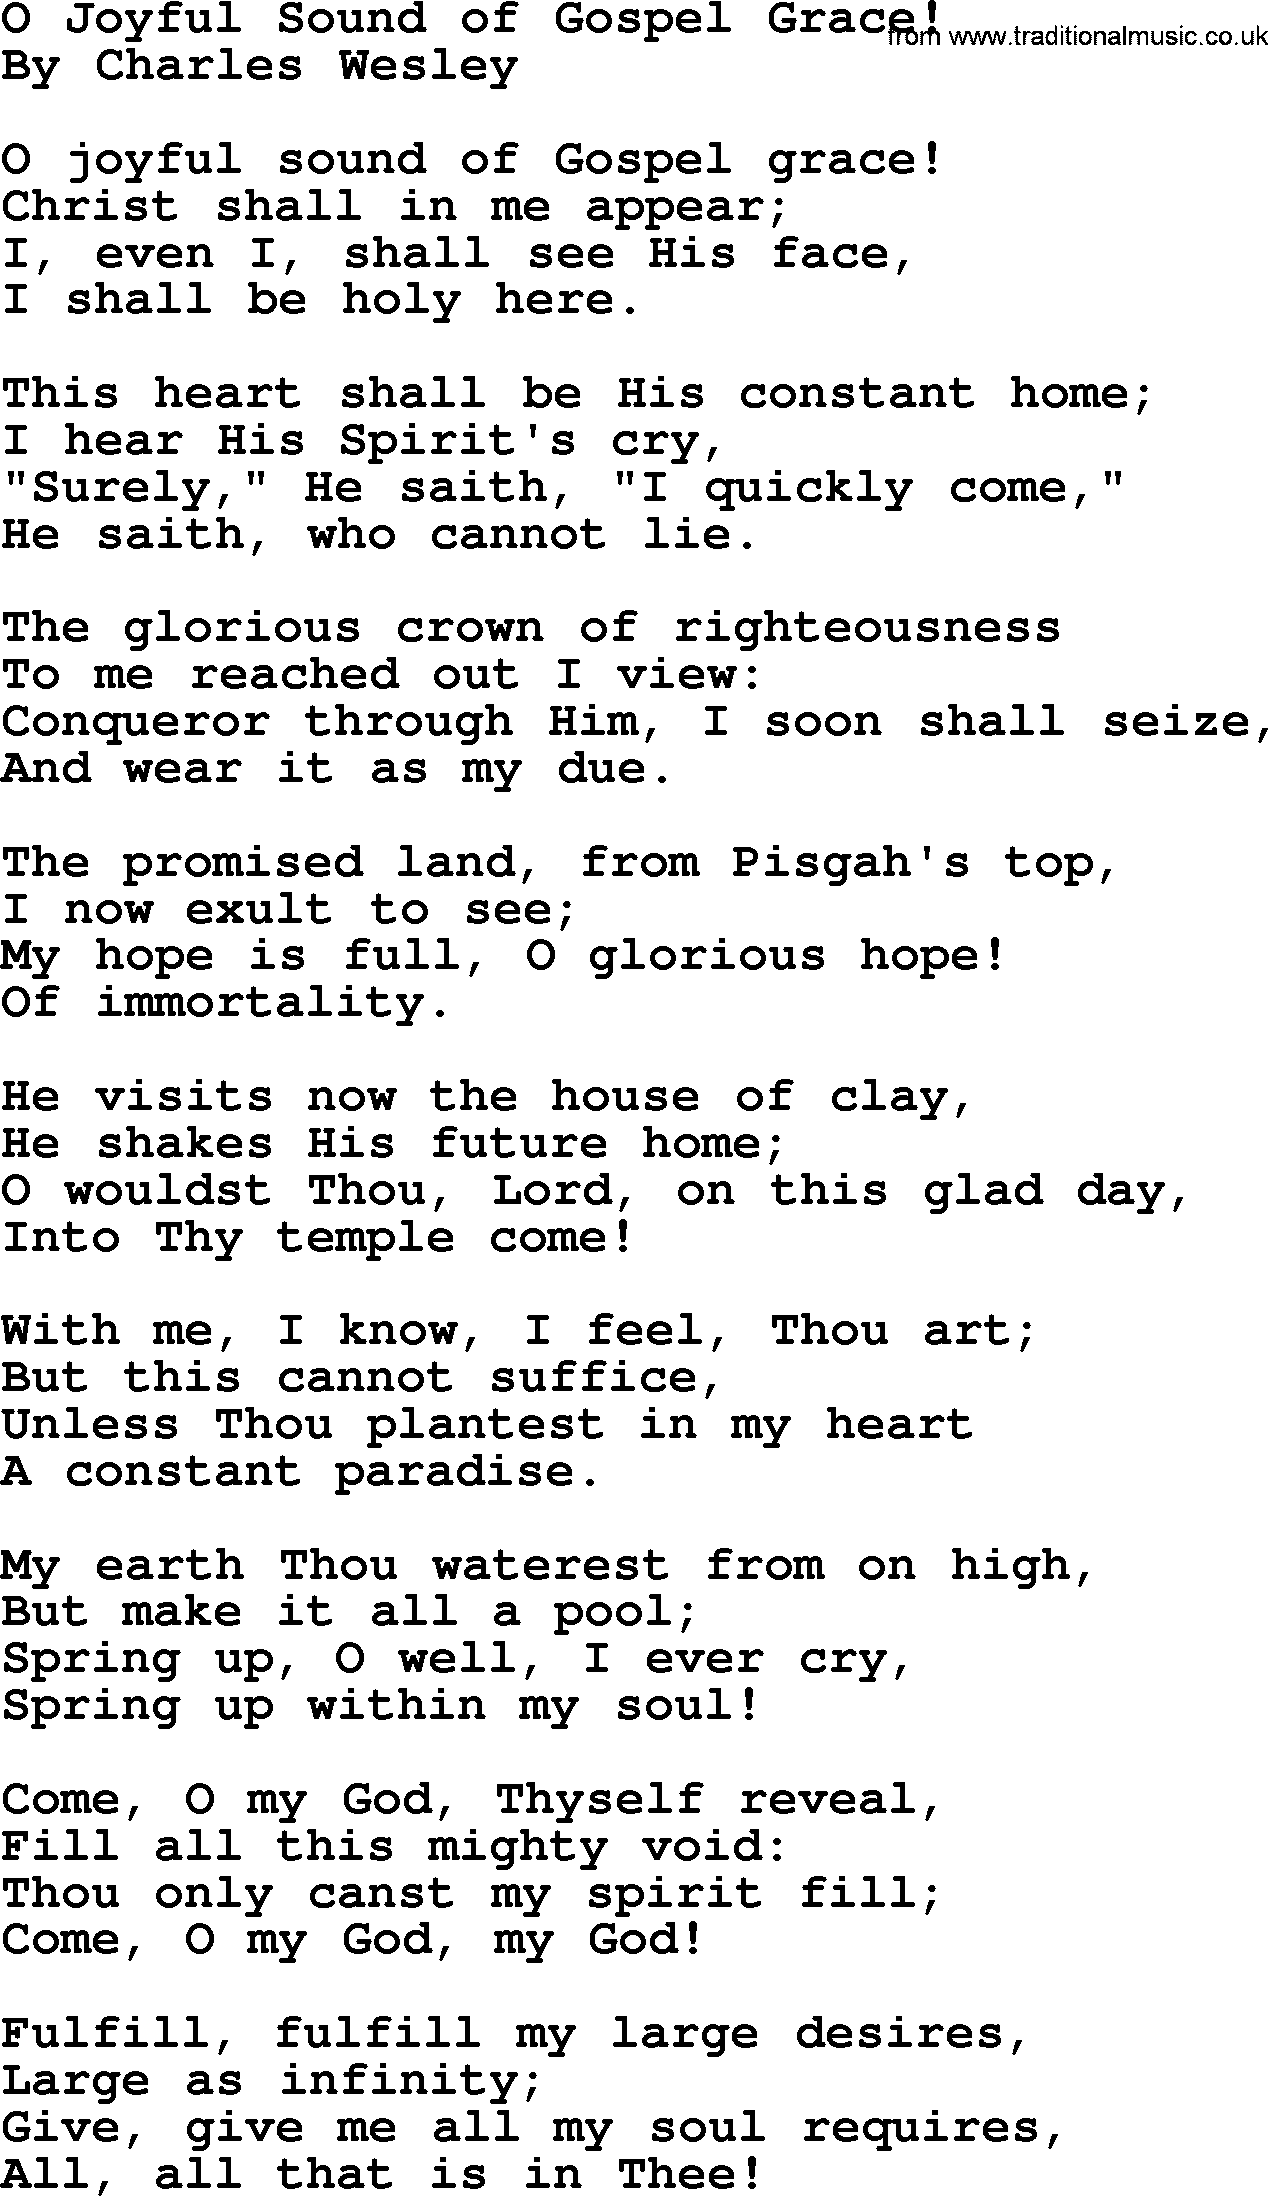 Charles Wesley hymn: O Joyful Sound Of Gospel Grace!, lyrics